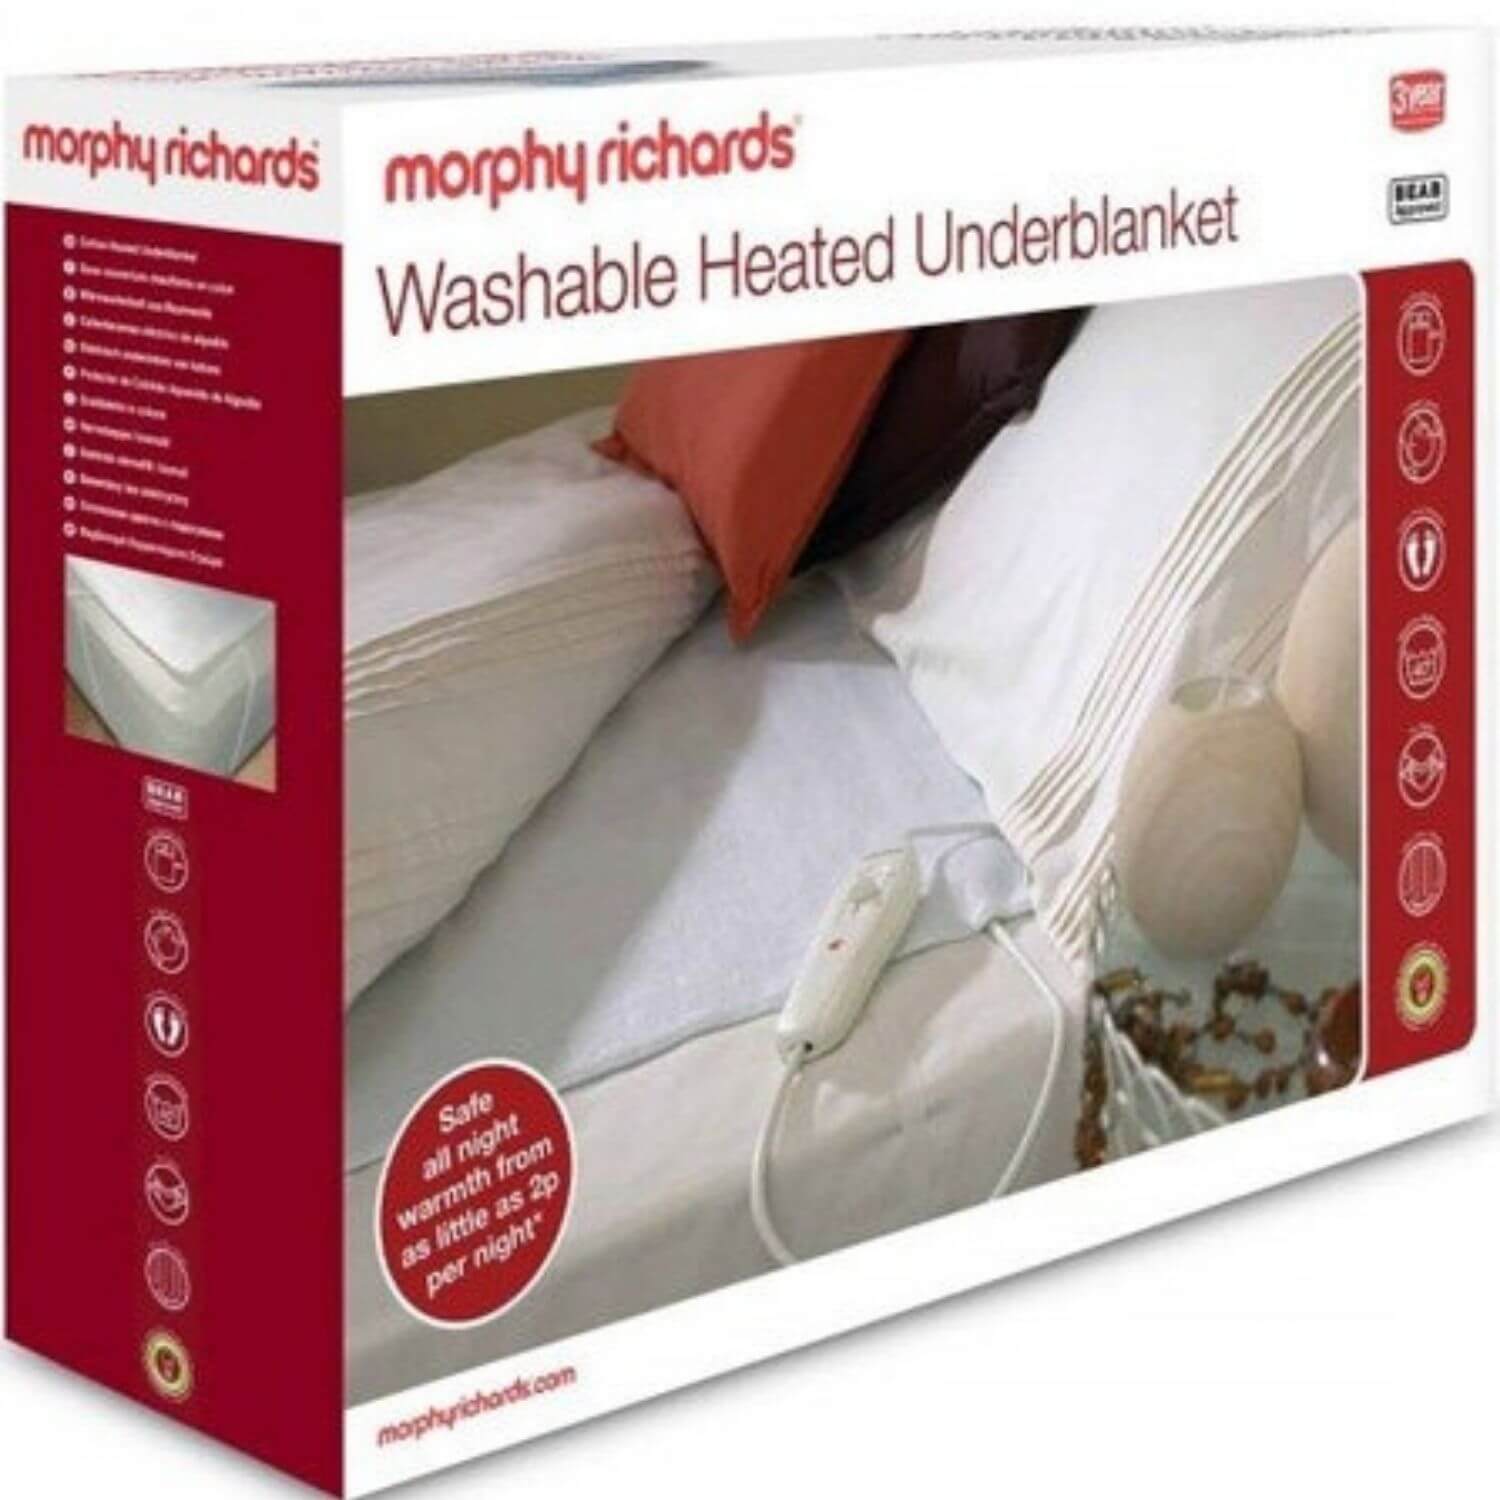 Morphy Richards Washable Heated Underblanket - Single Size | 600113 1 Shaws Department Stores